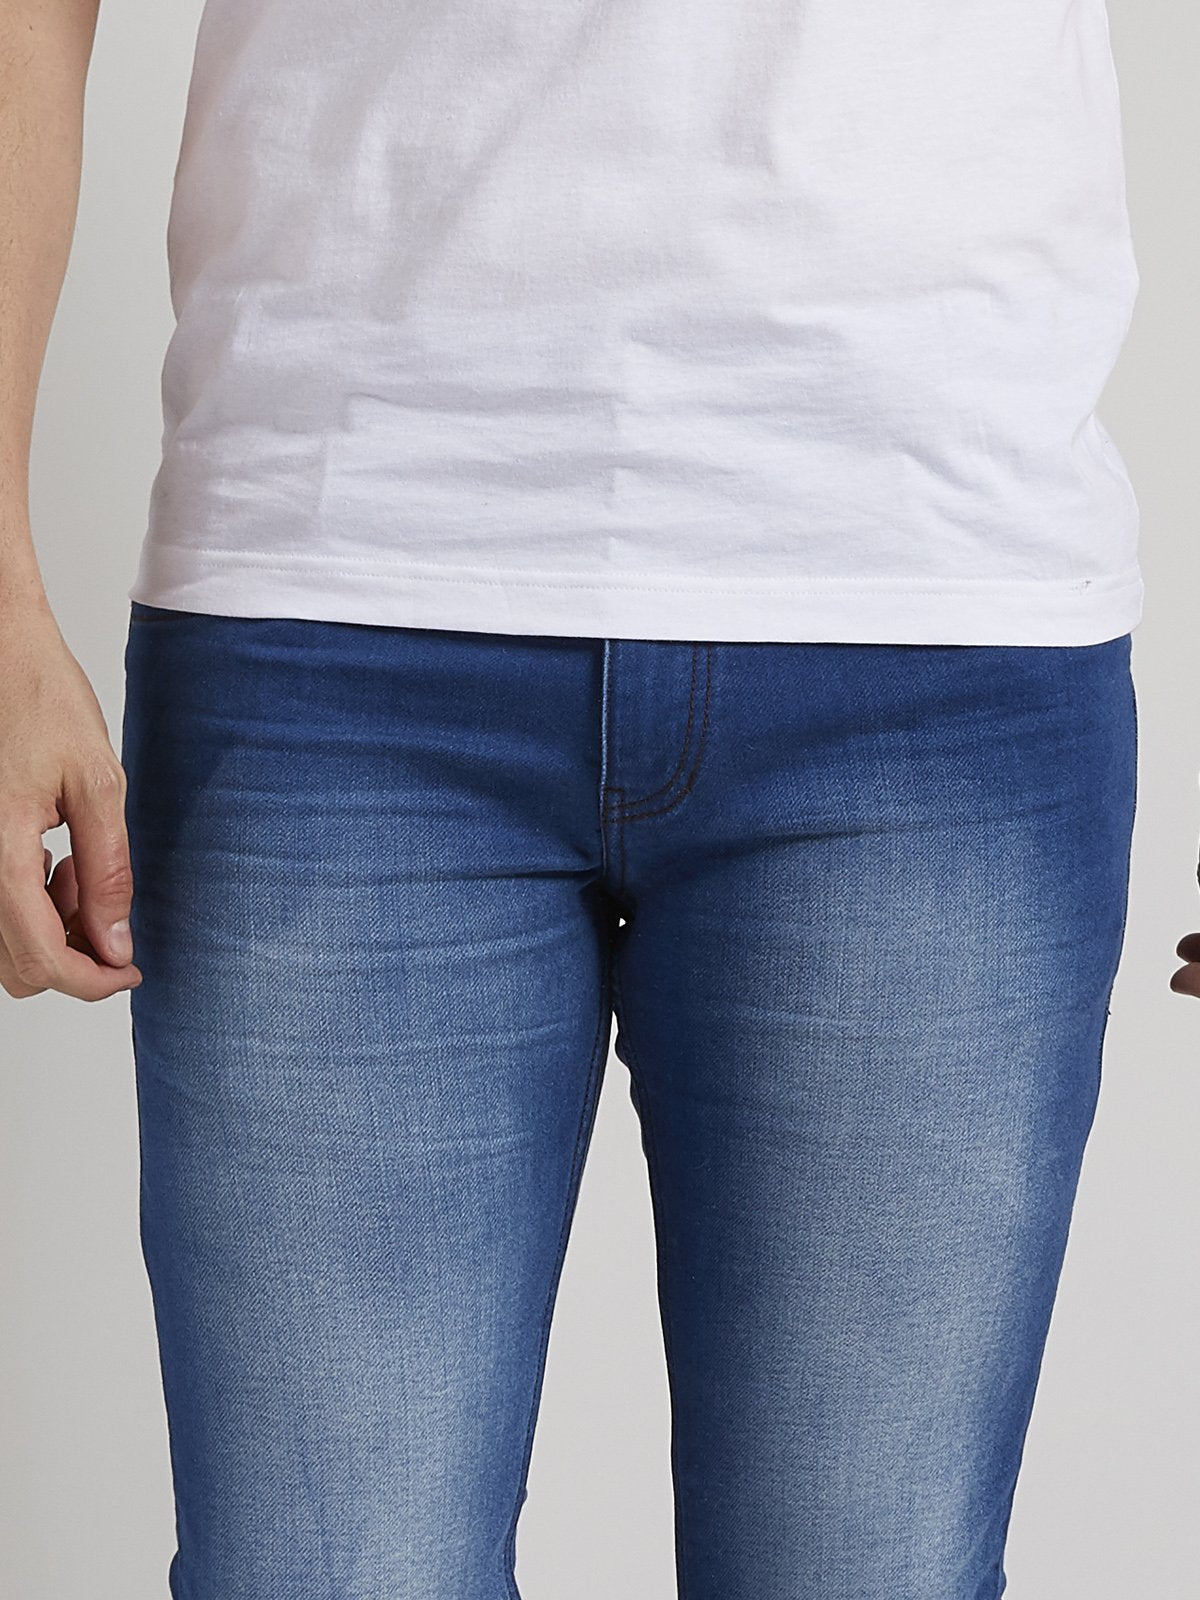 Identiti Stretch Jeans For Men